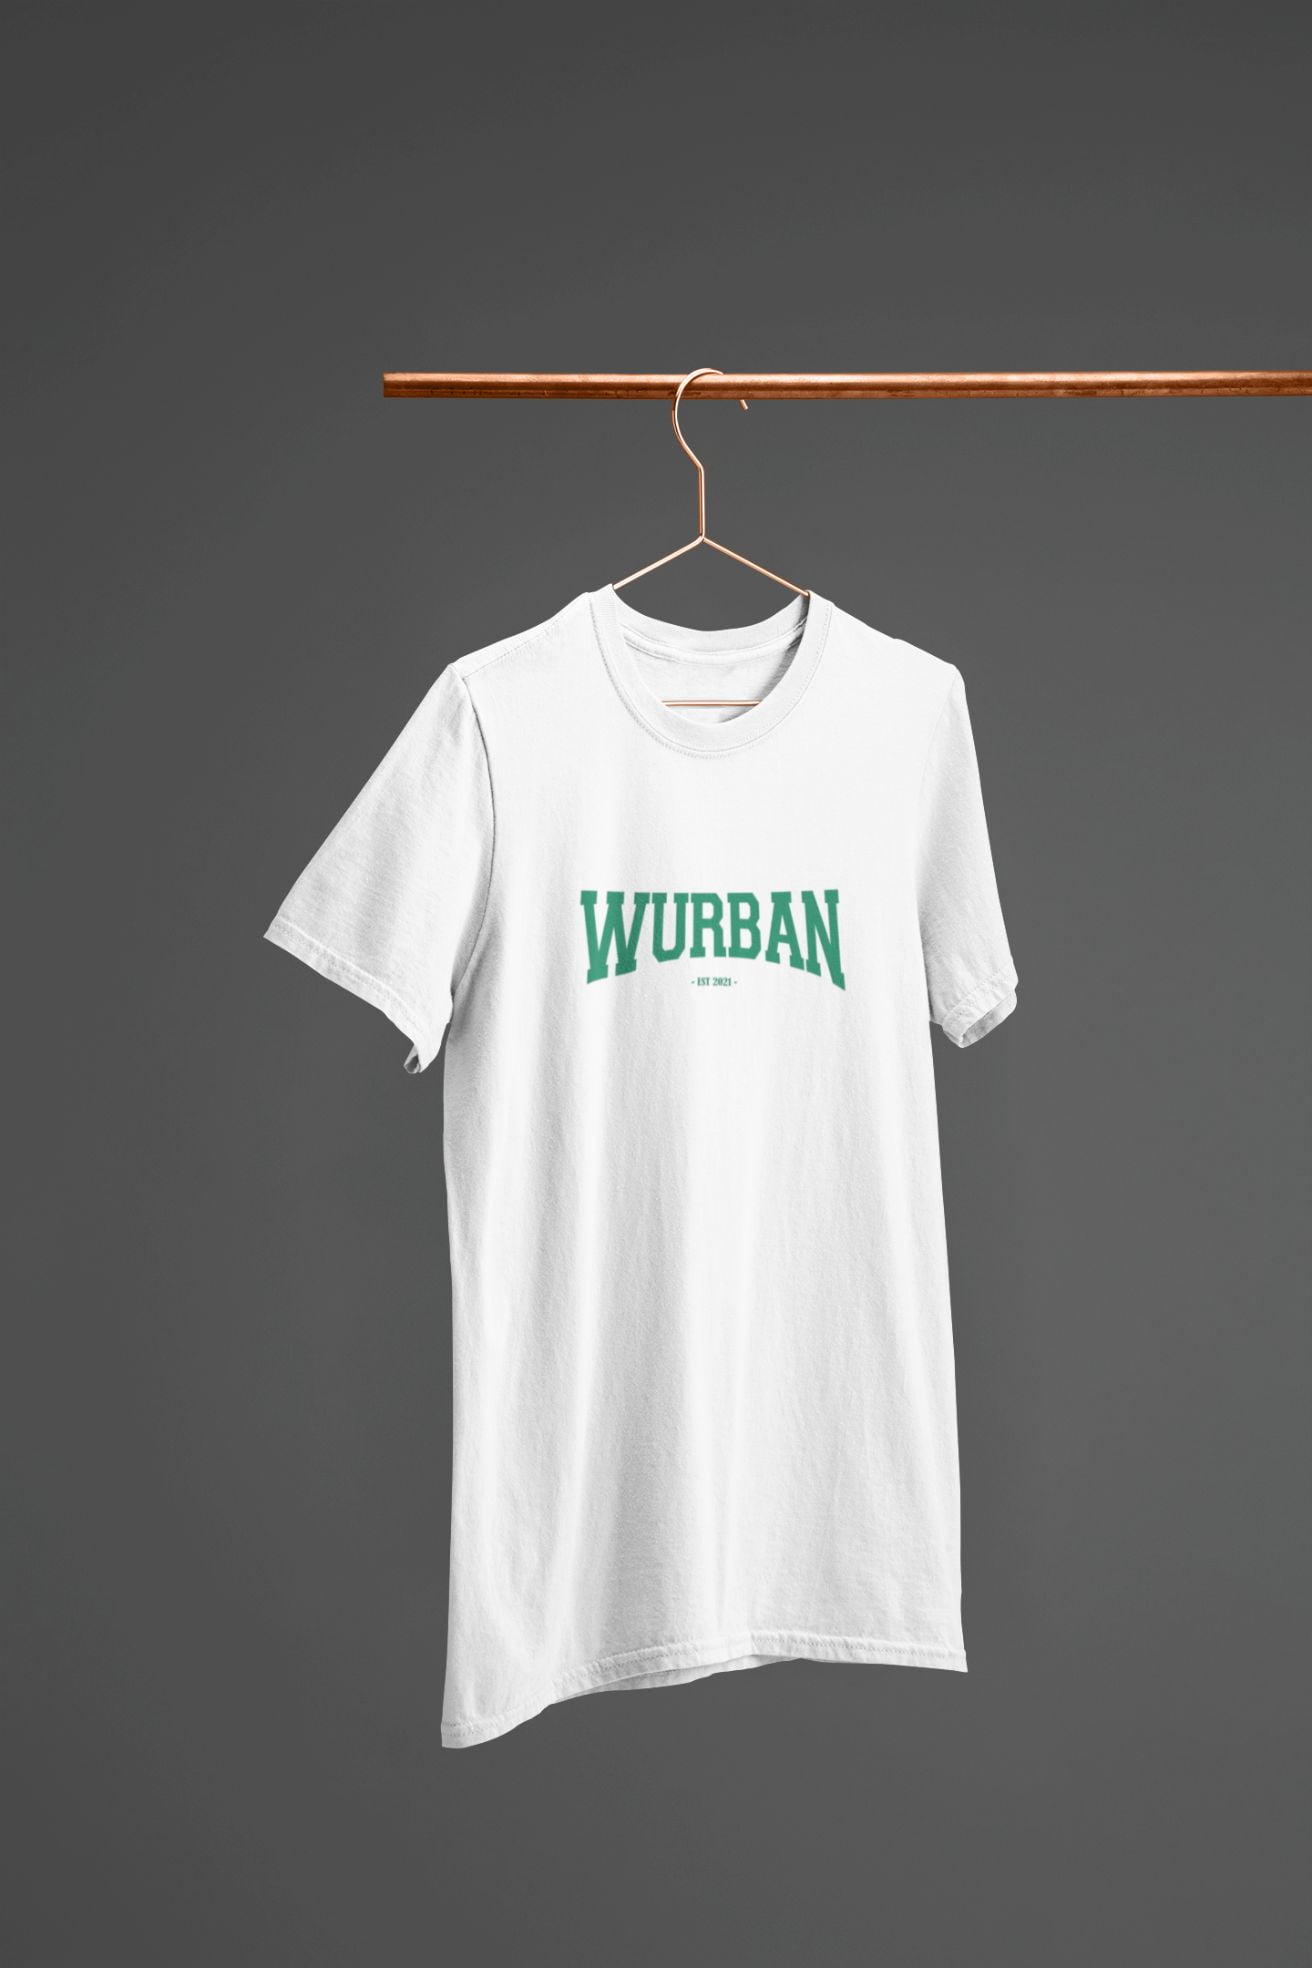 University shirt wurban wear